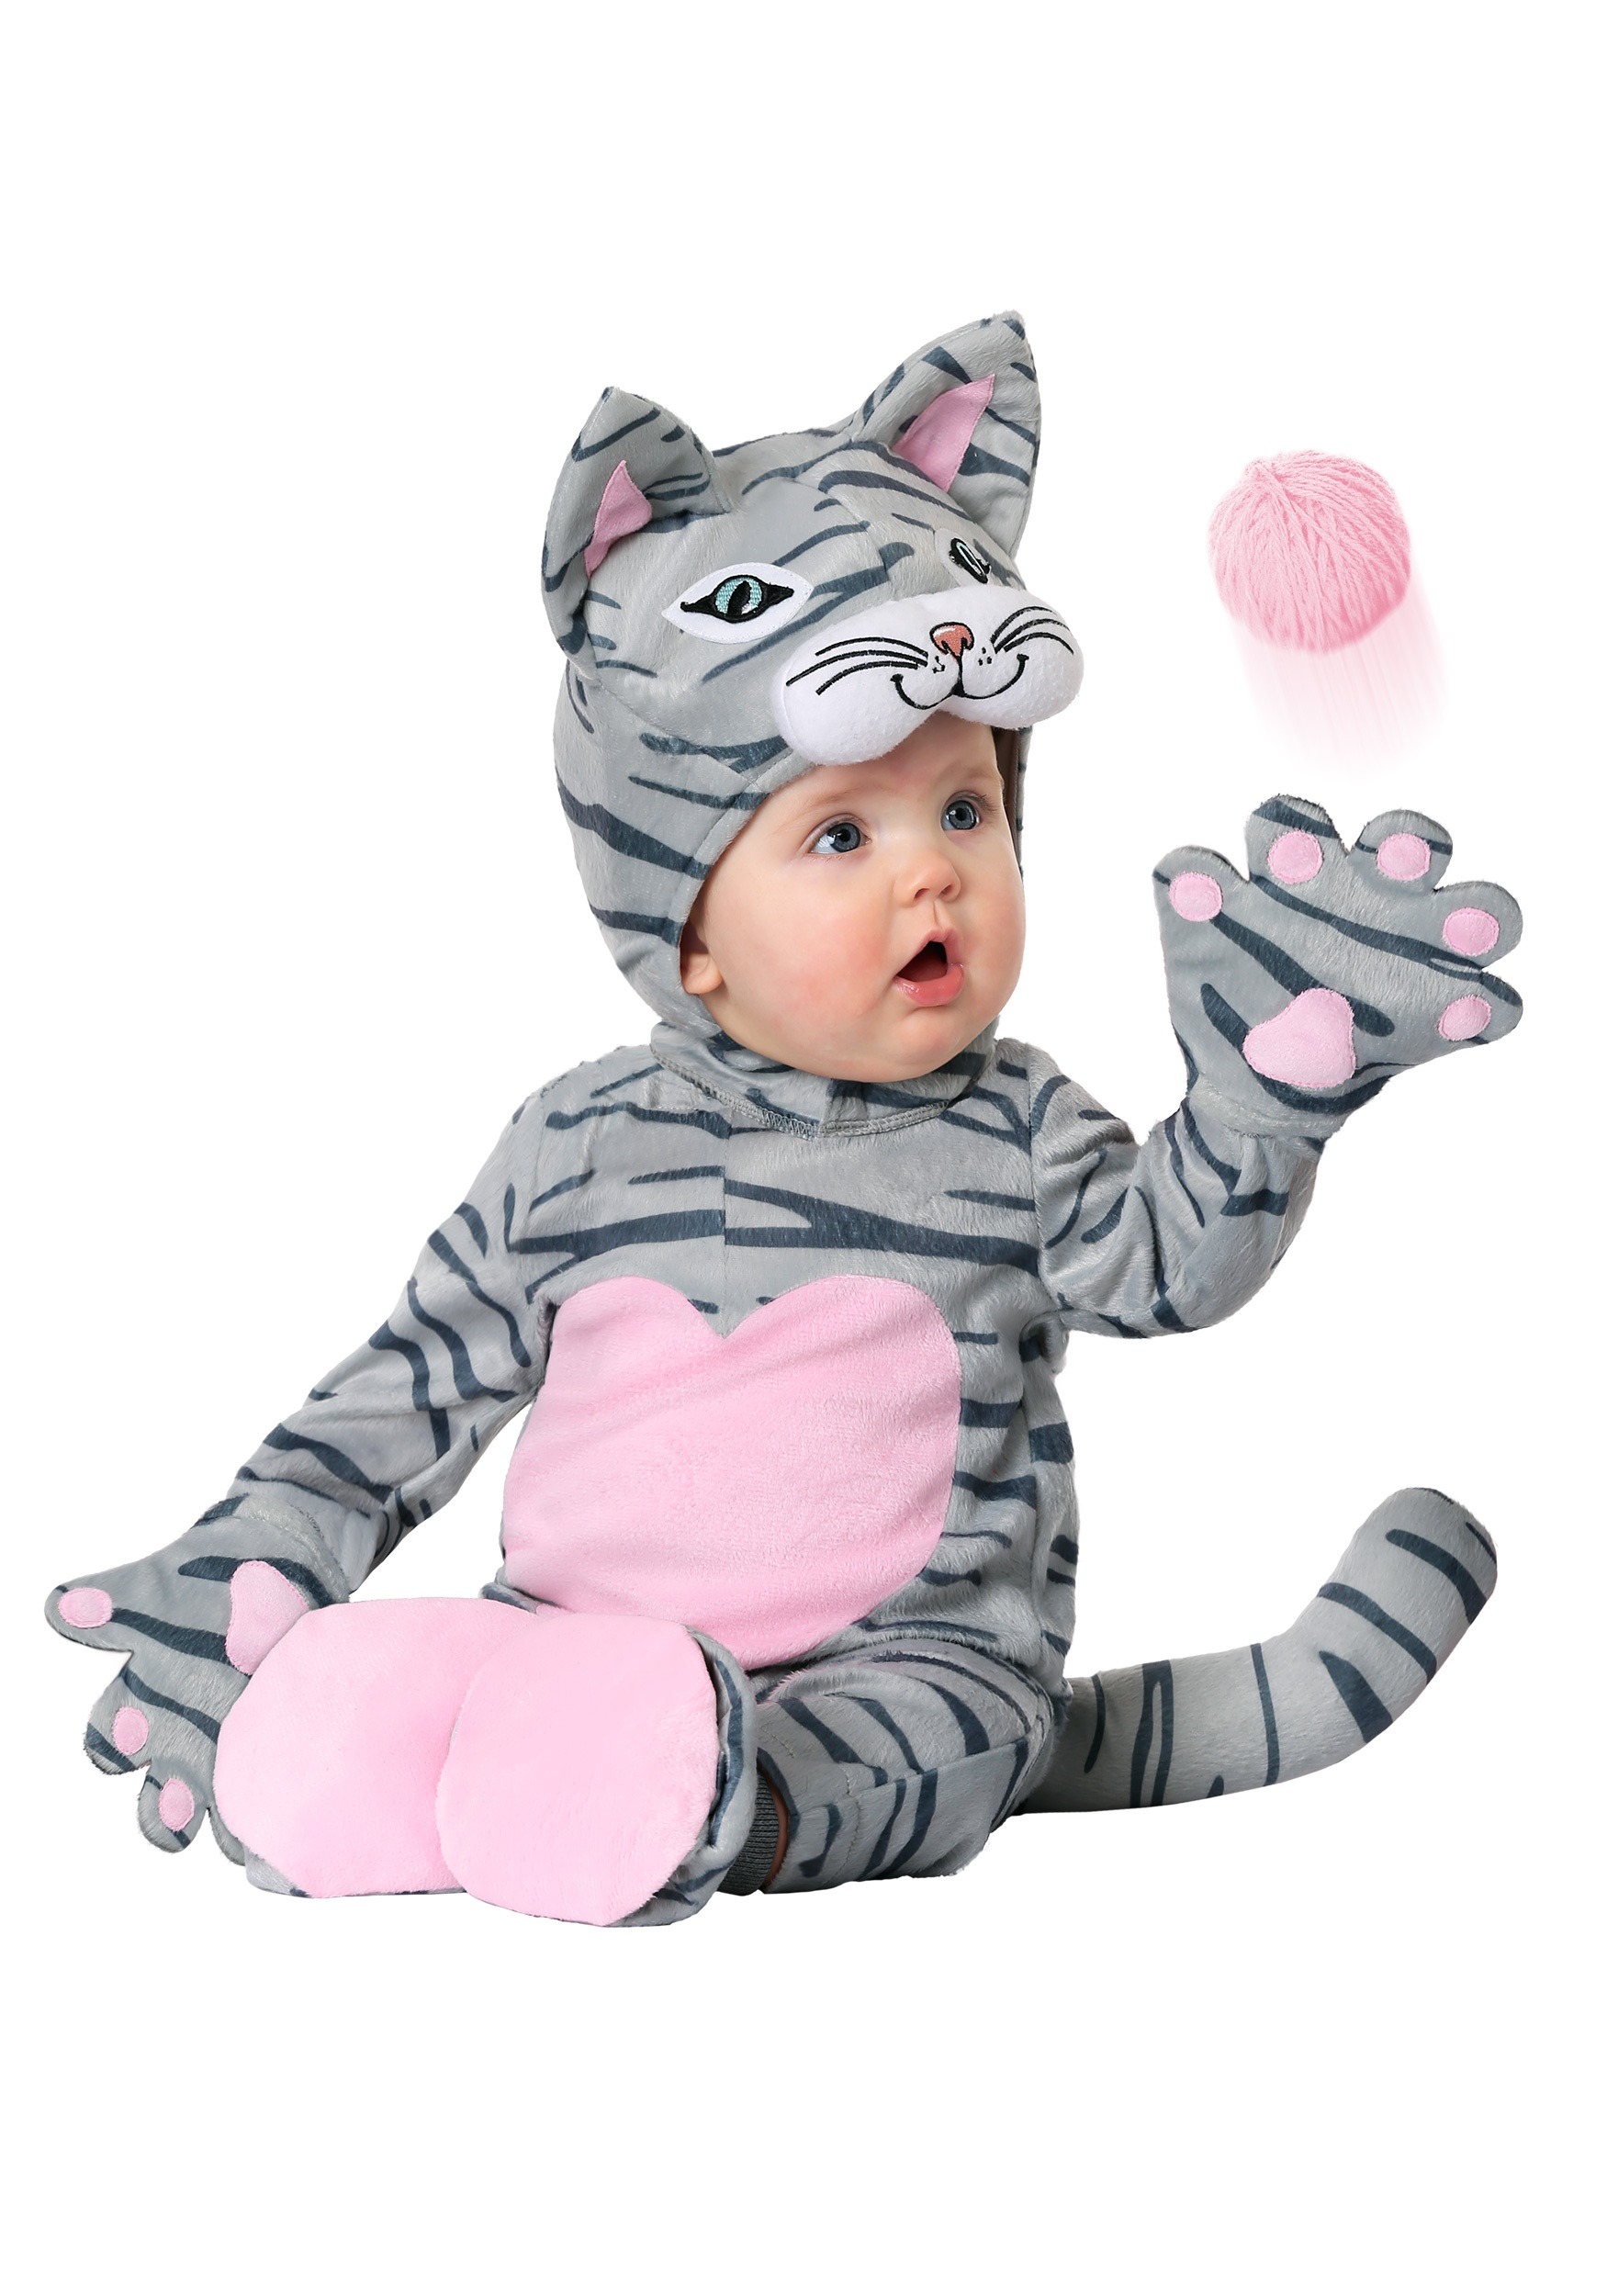 Photos - Fancy Dress FUN Costumes Lovable Kitten Costume for Infants Pink/Gray FUN6928IN